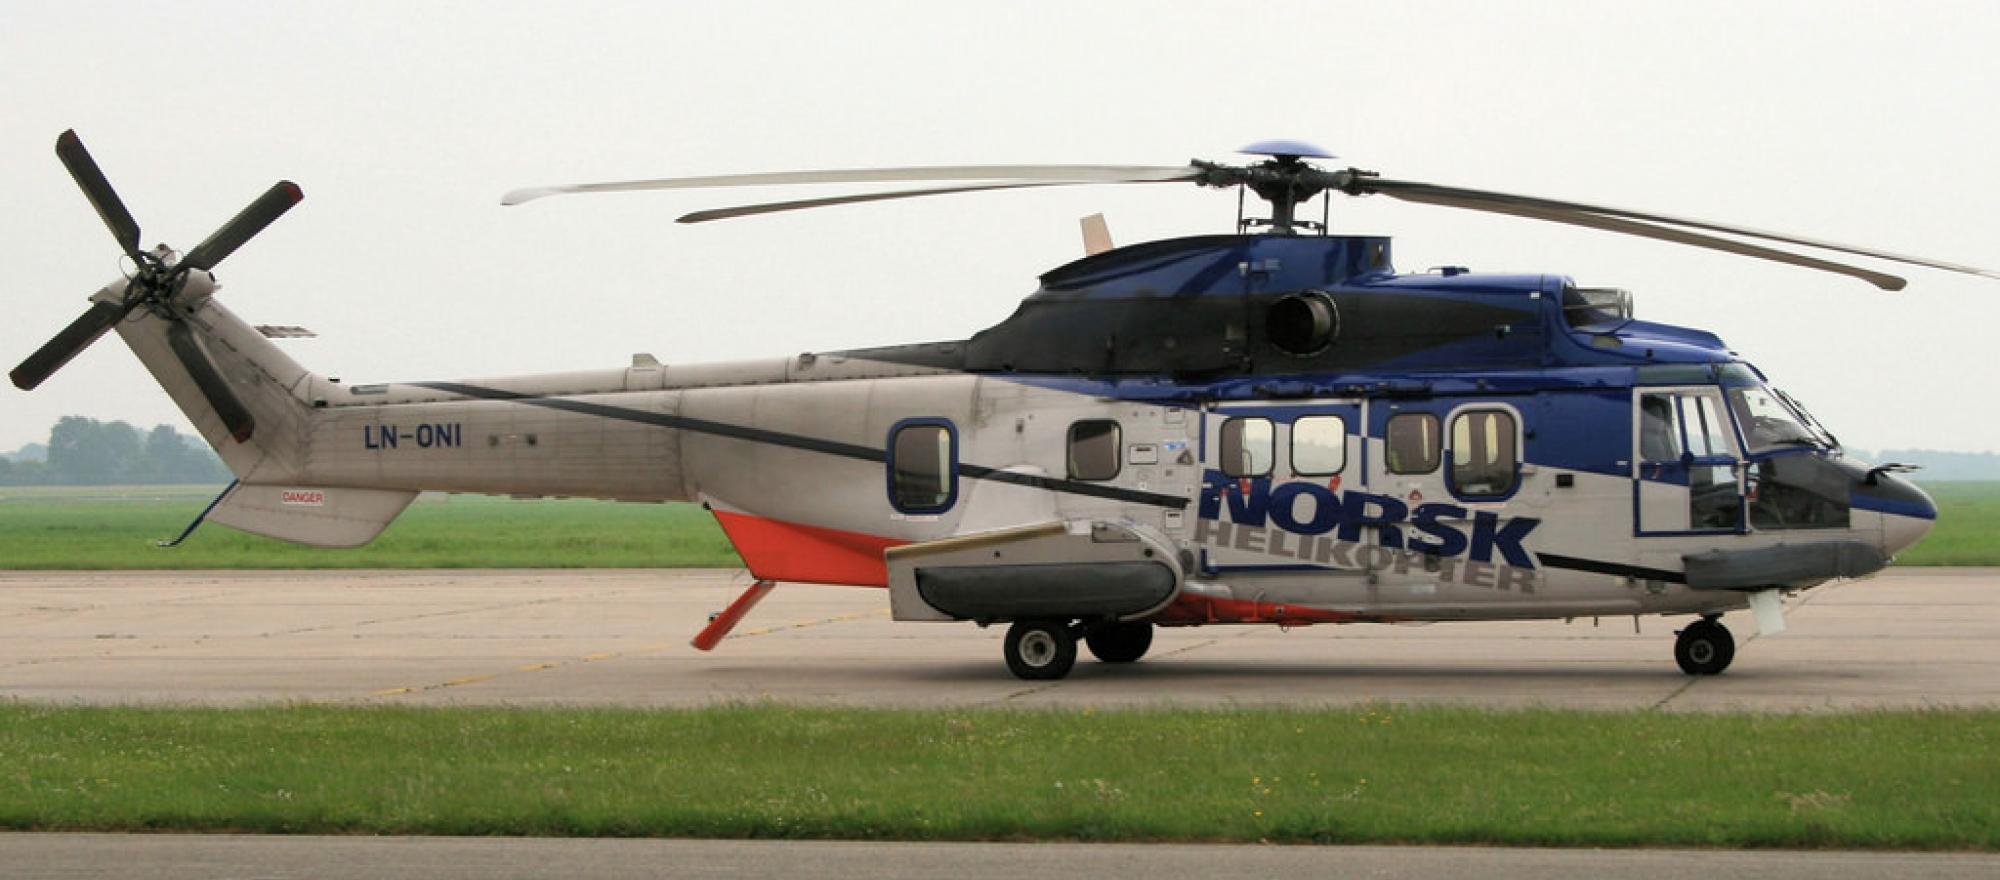 super puma helicopter